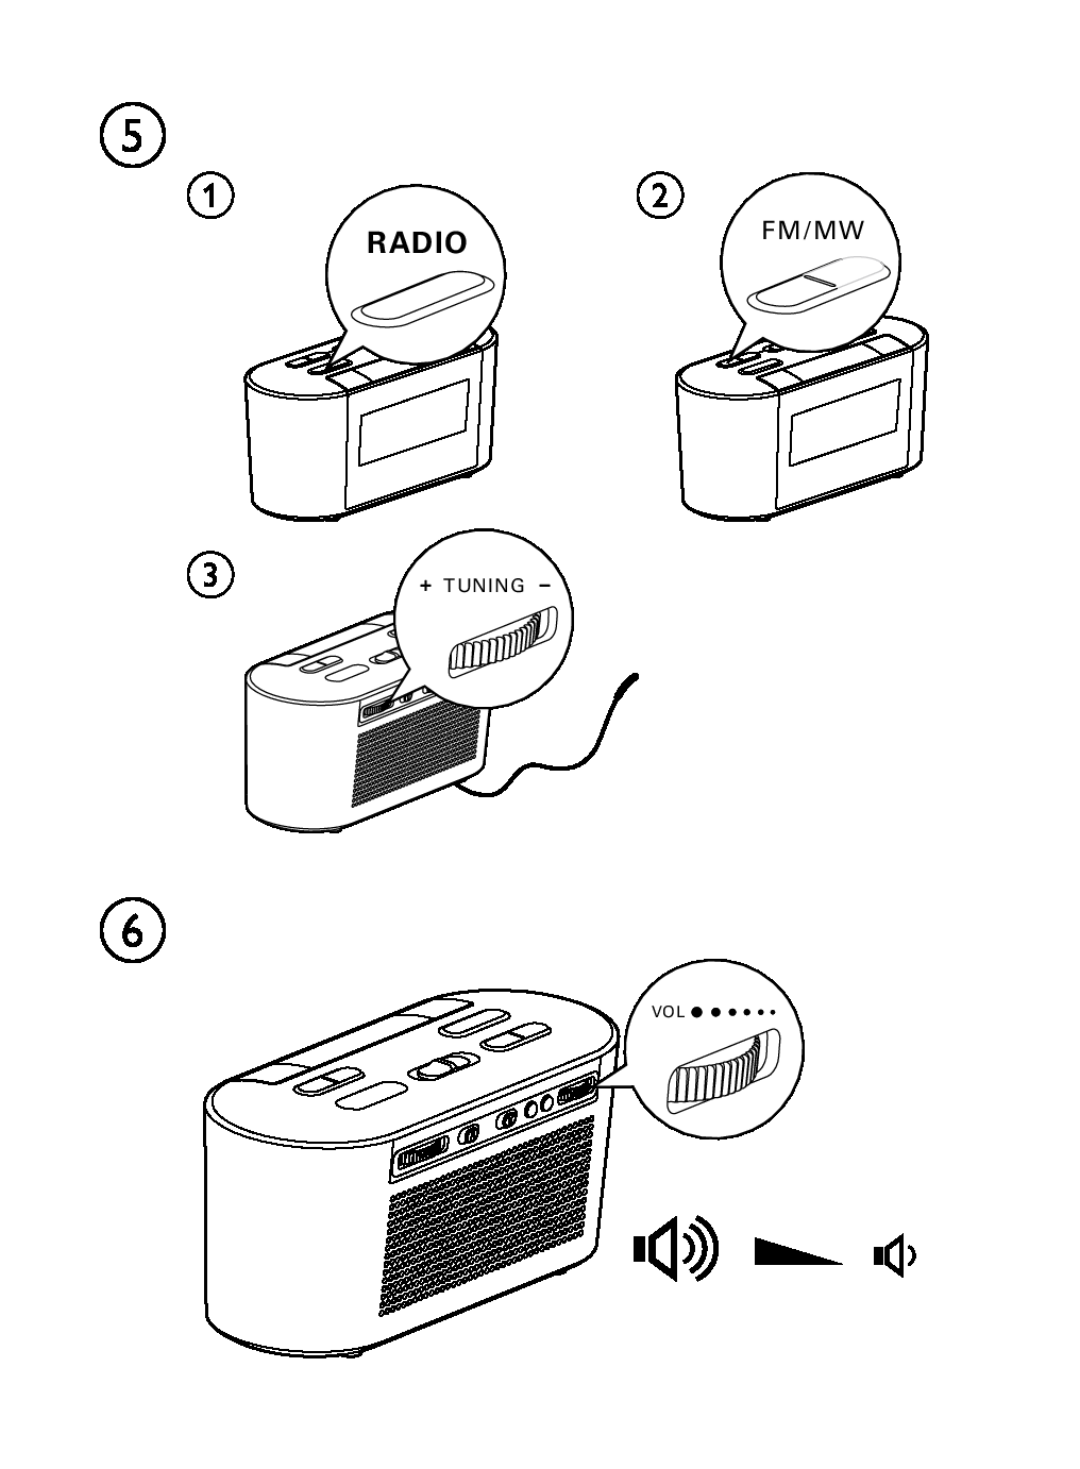 Philips AJ3500 user manual Radiofm/Mw, Tuning 